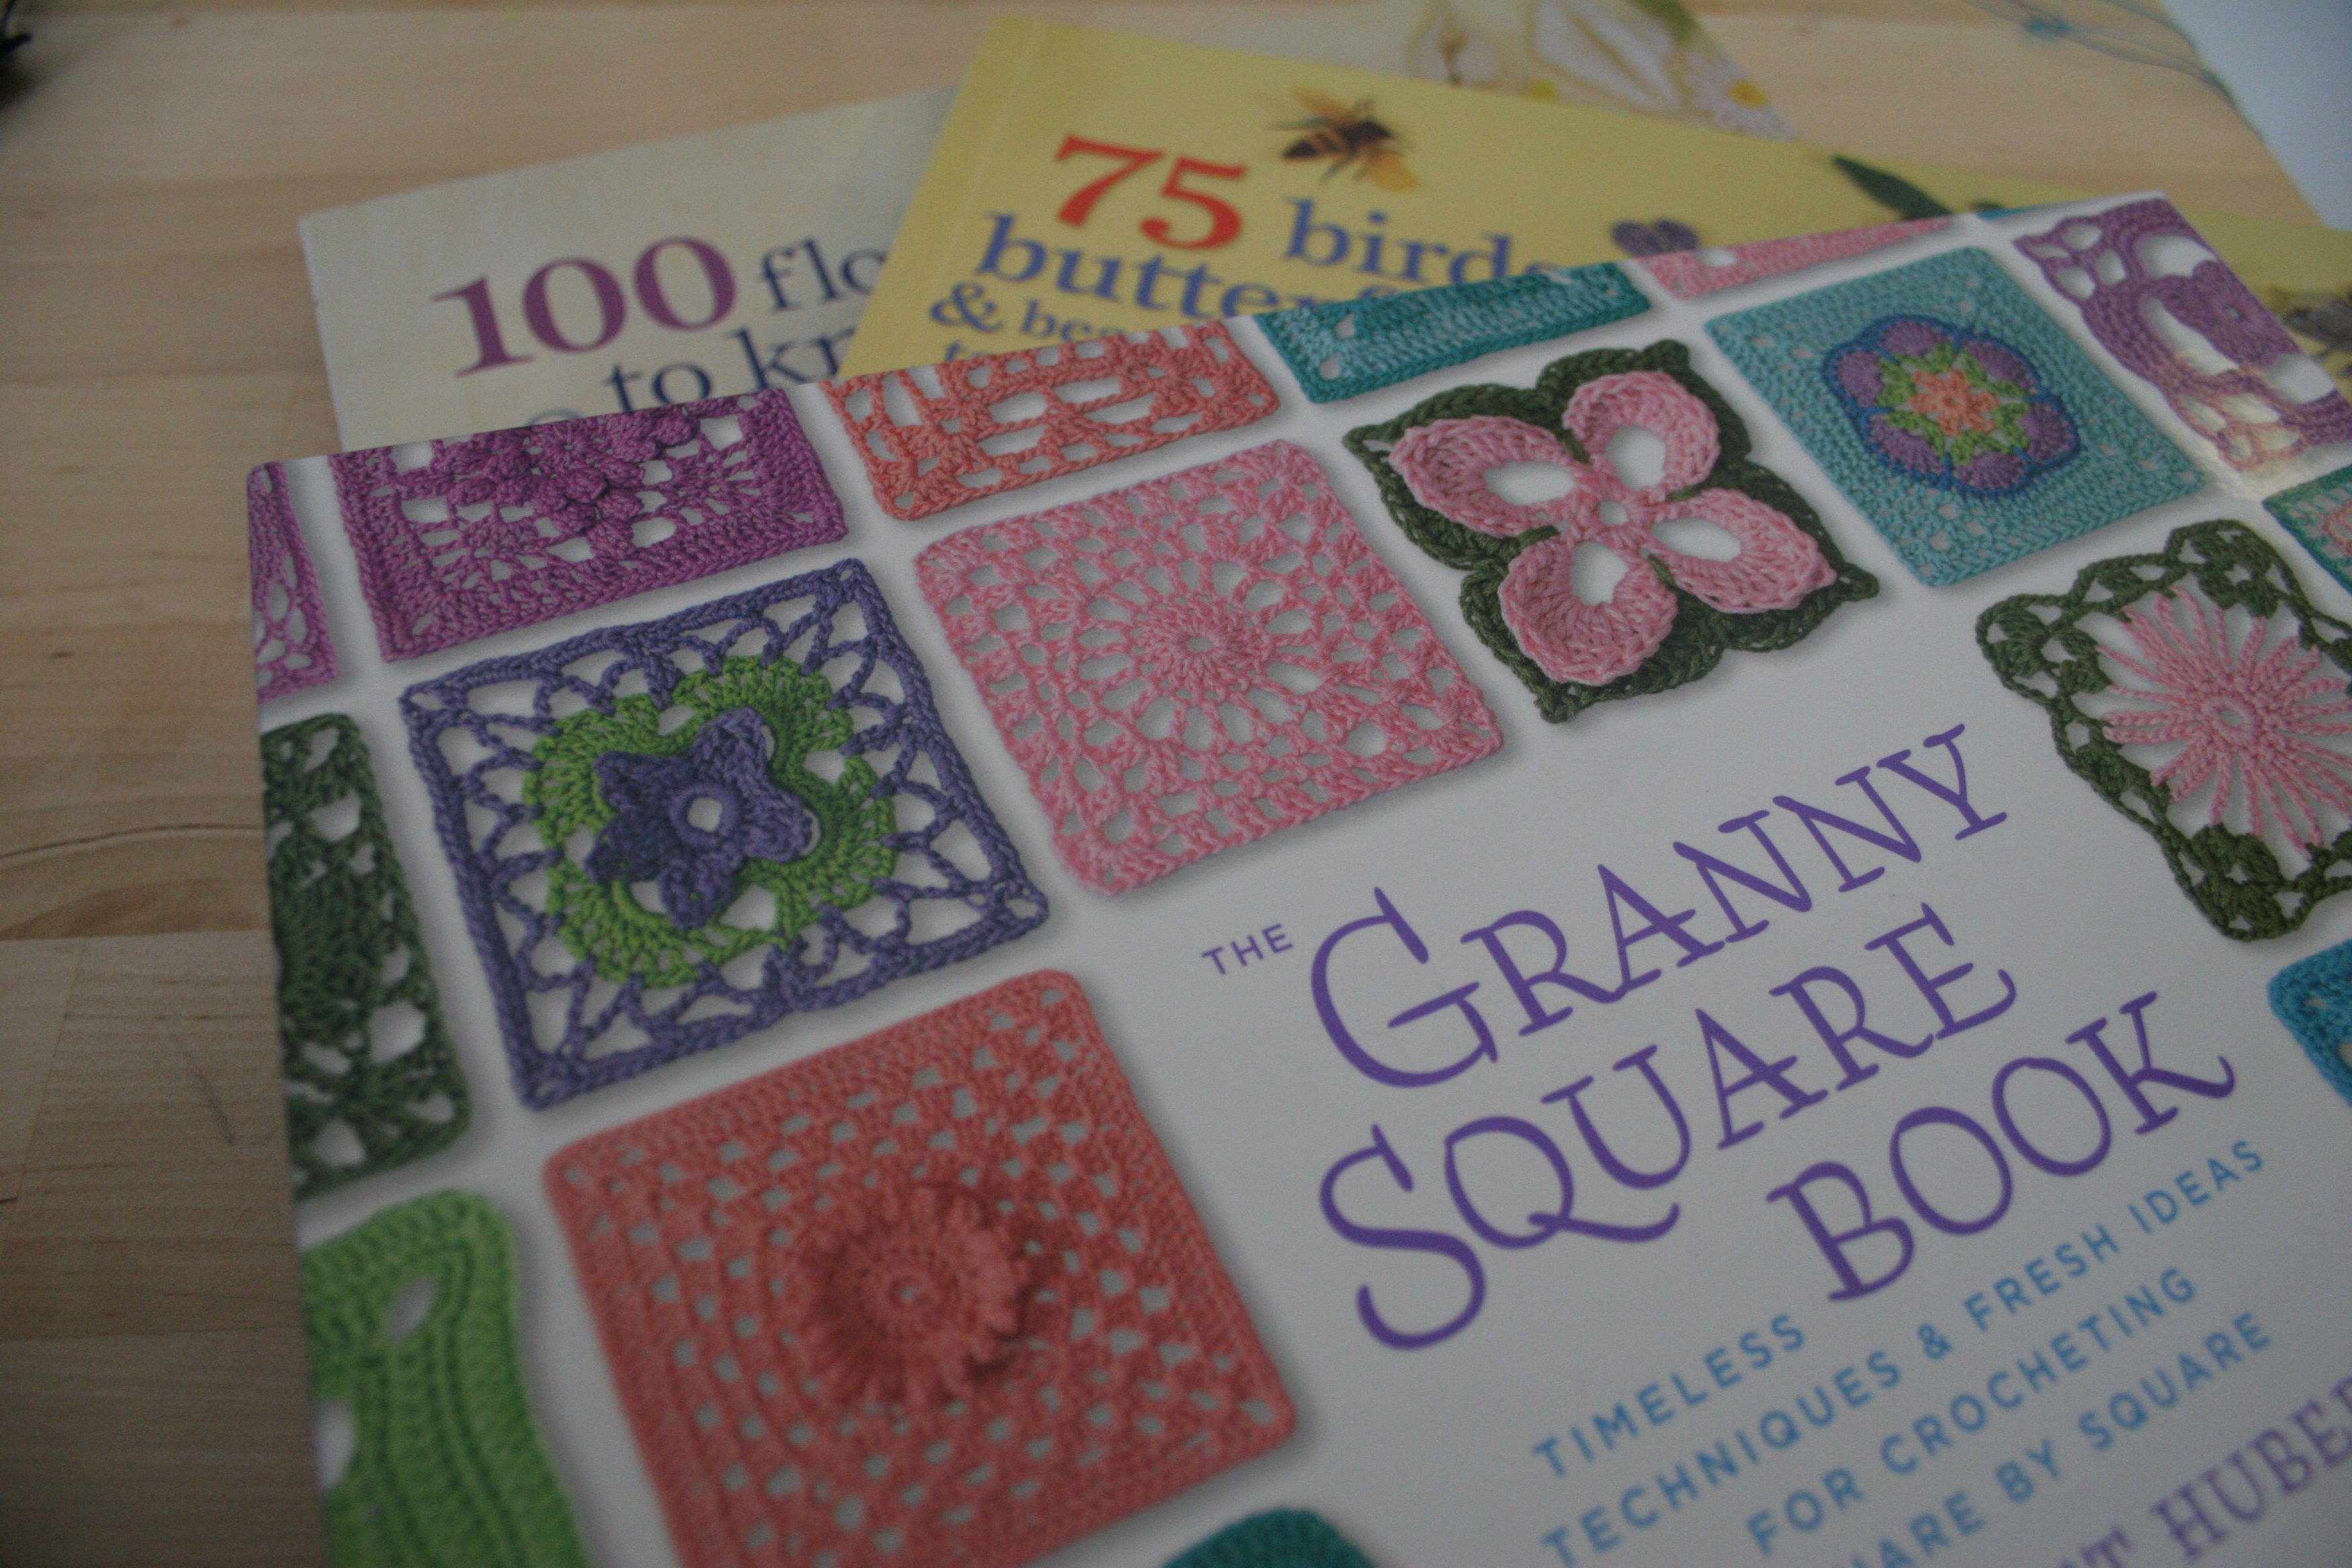 Review – The Granny Square Book